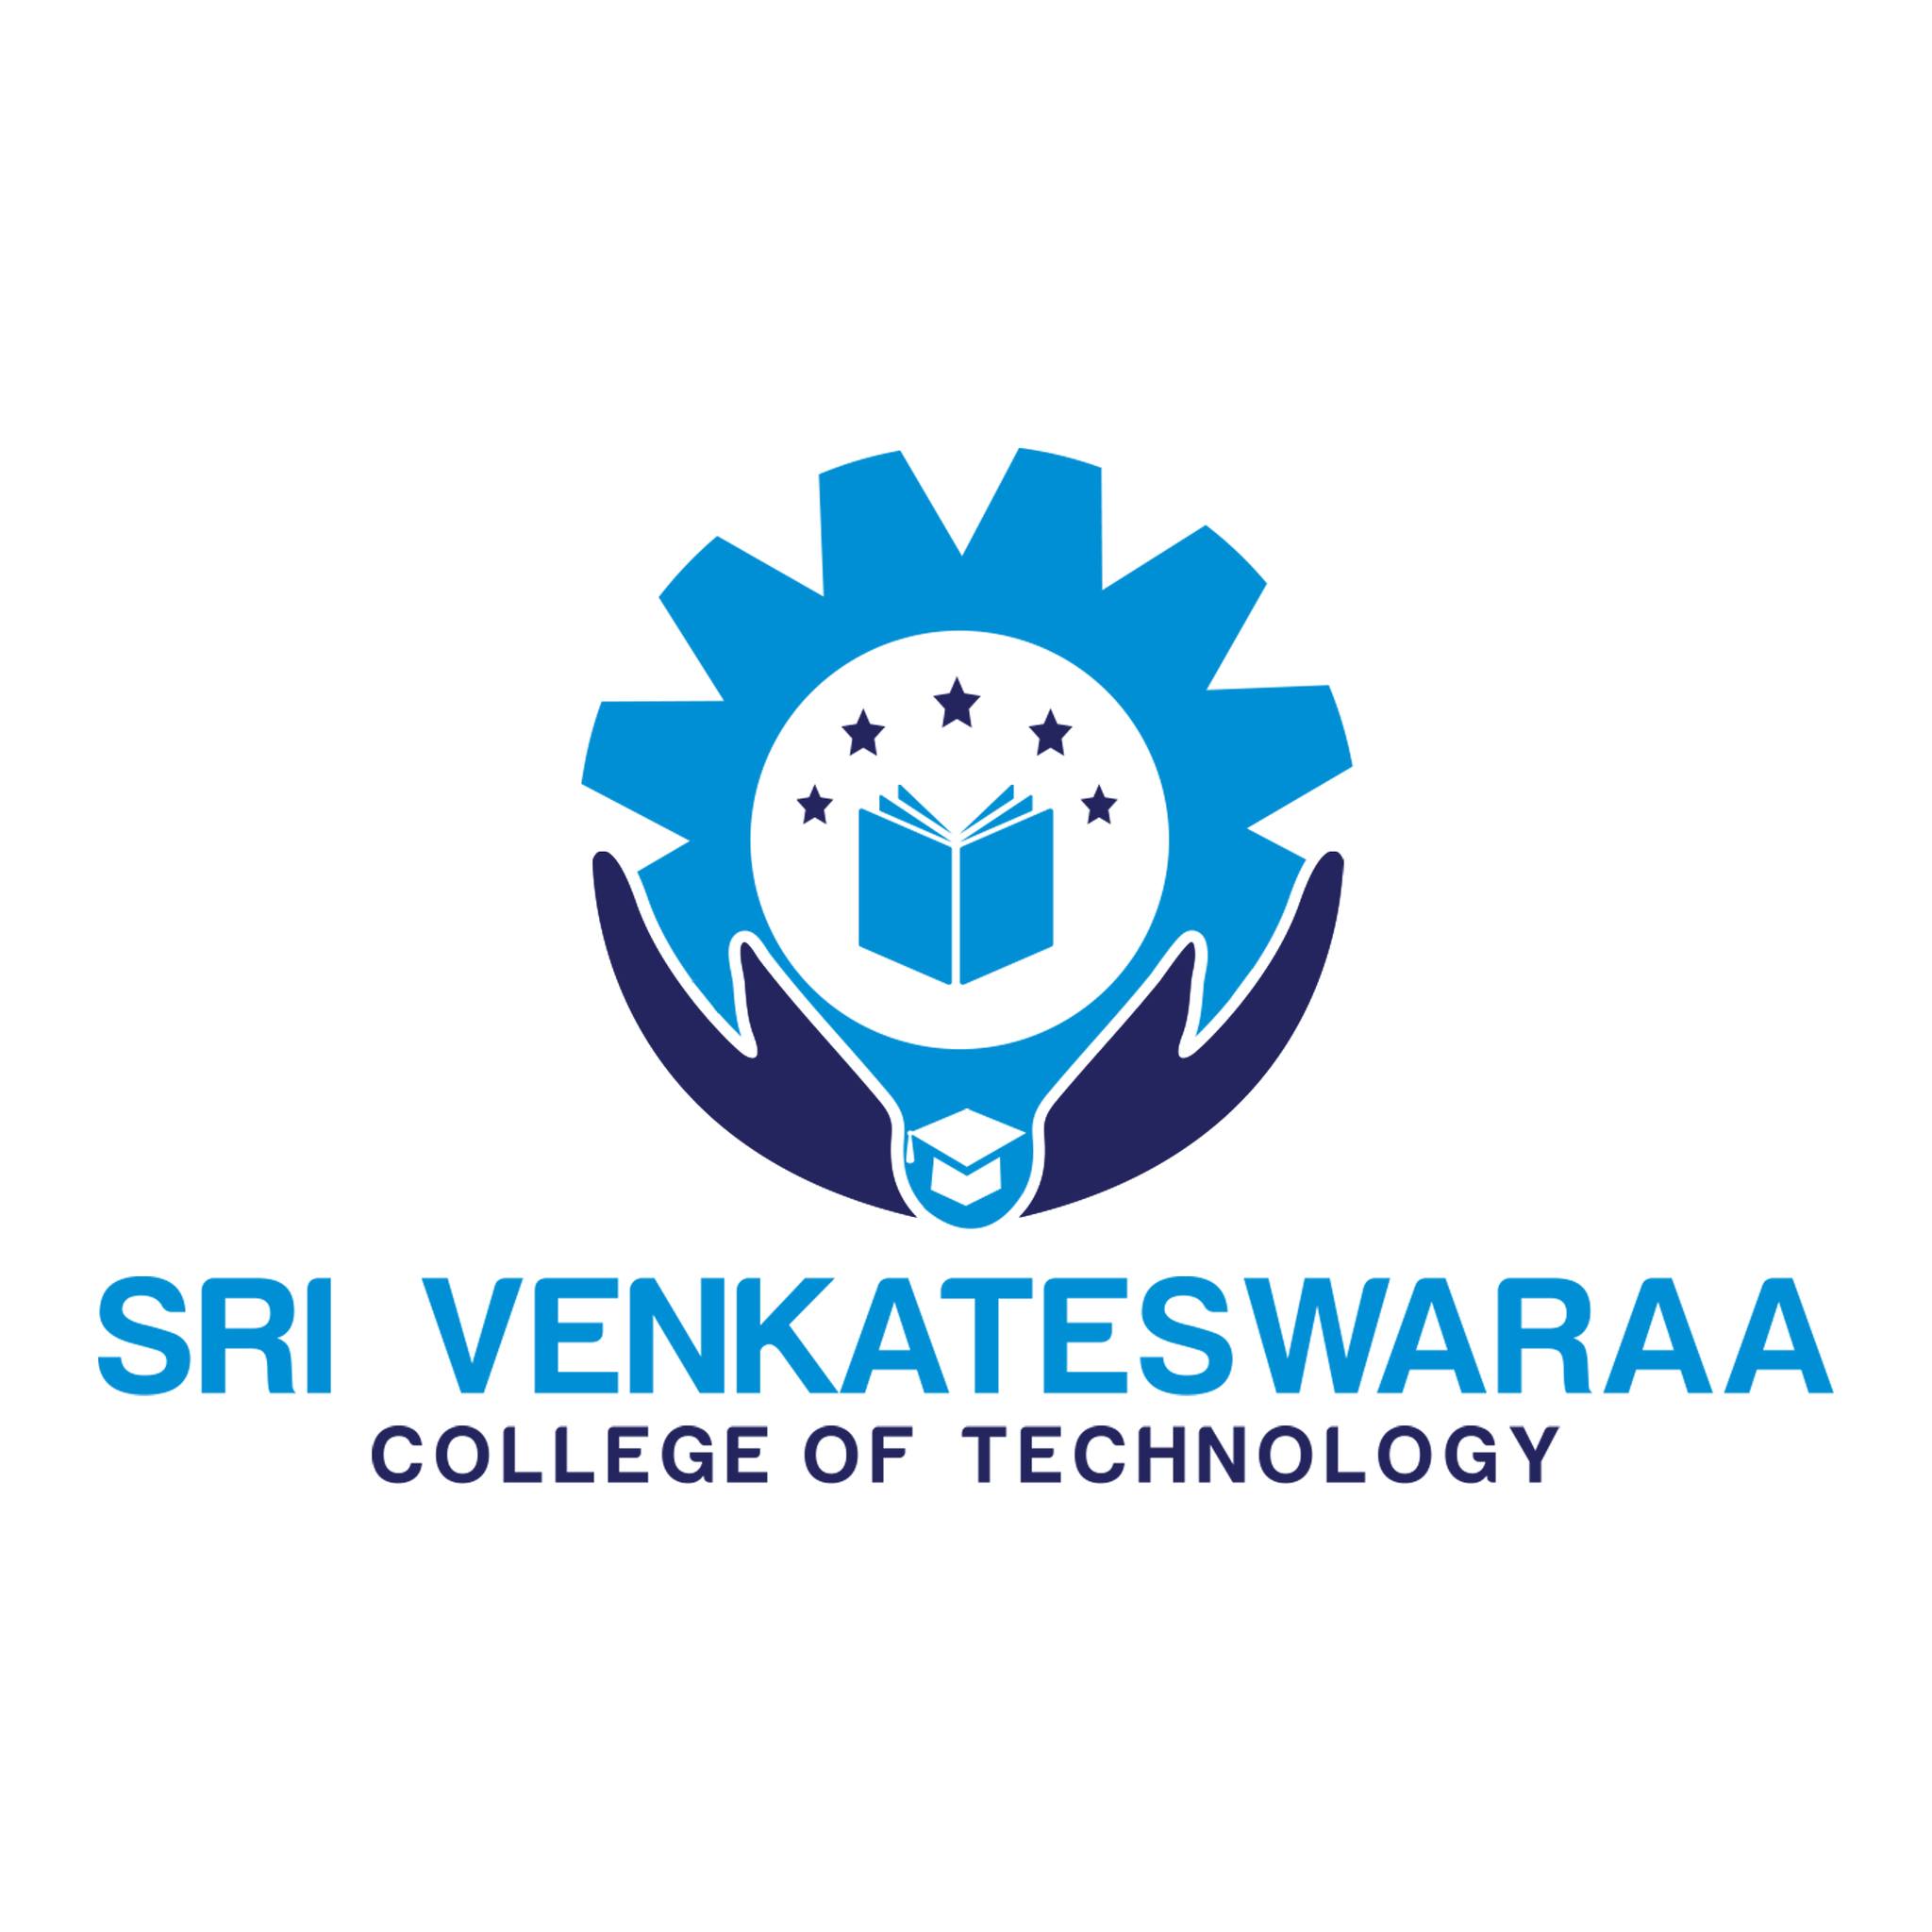 Sri Venkateswaraa College of Technology in Kanchipuram|Schools|Education